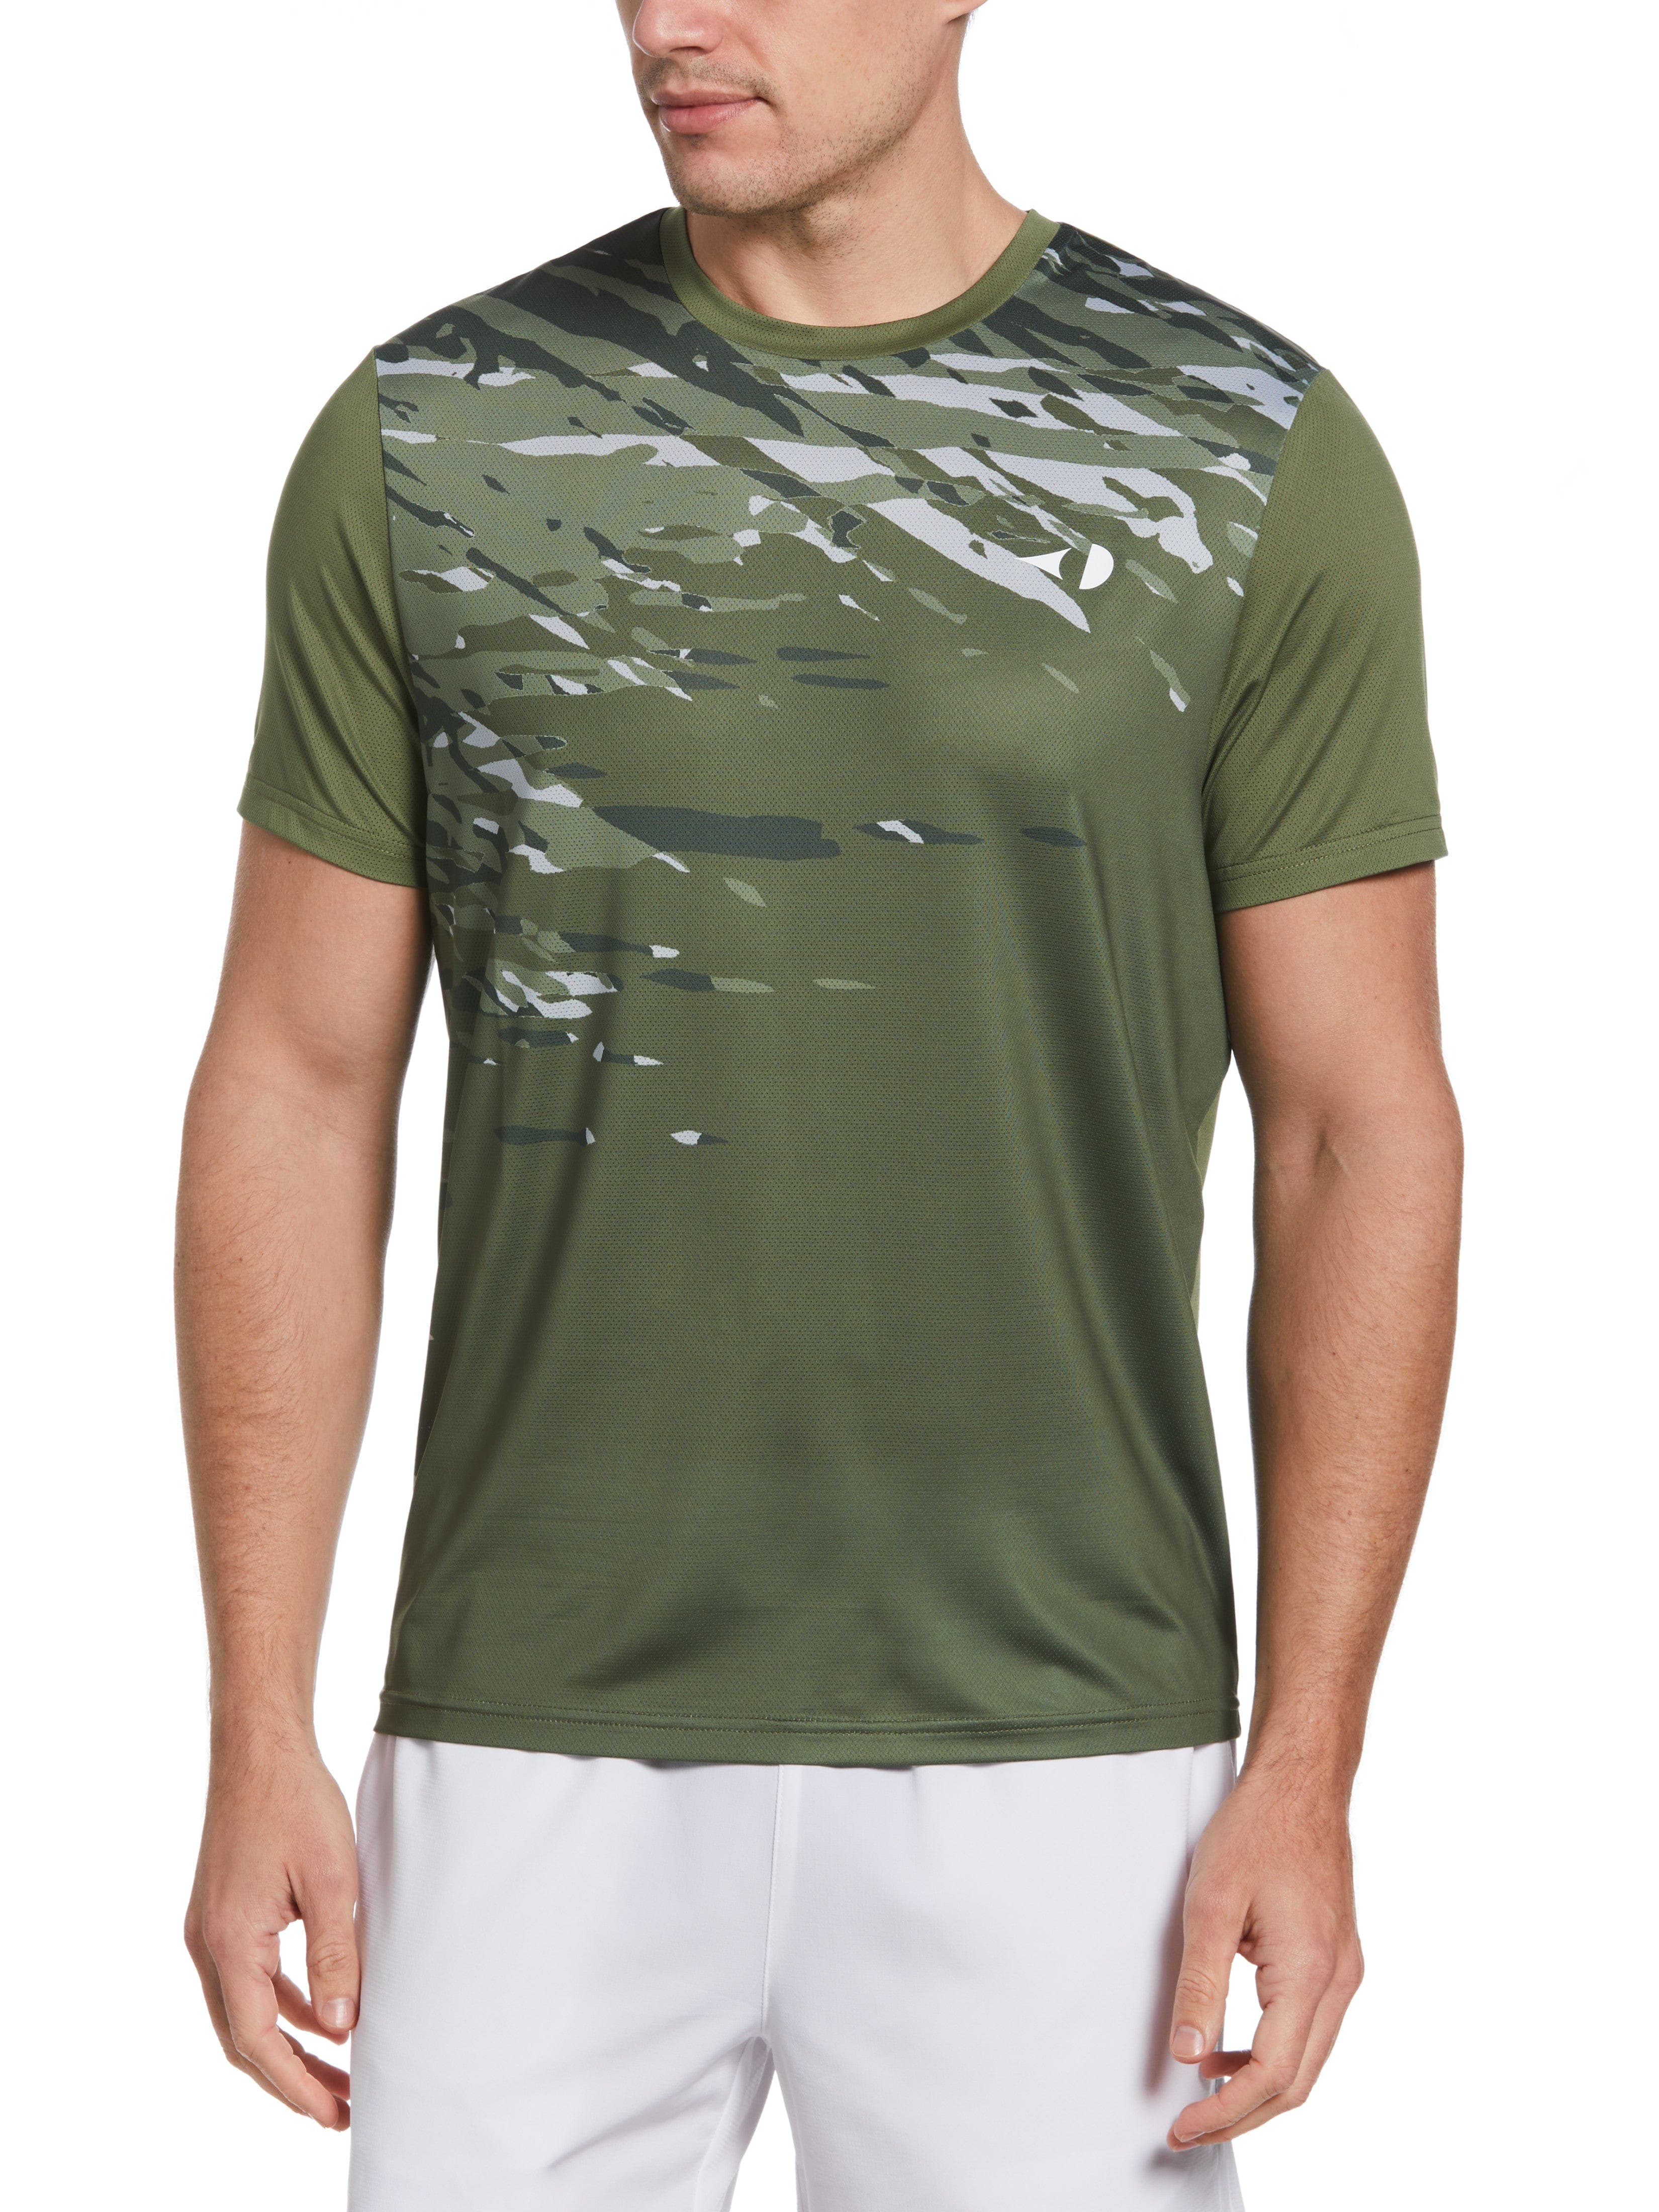 Grand Slam Mens Asymmetric Camo Print Tennis T-Shirt, Size Medium, Olivine Green, Polyester/Spandex | Golf Apparel Shop